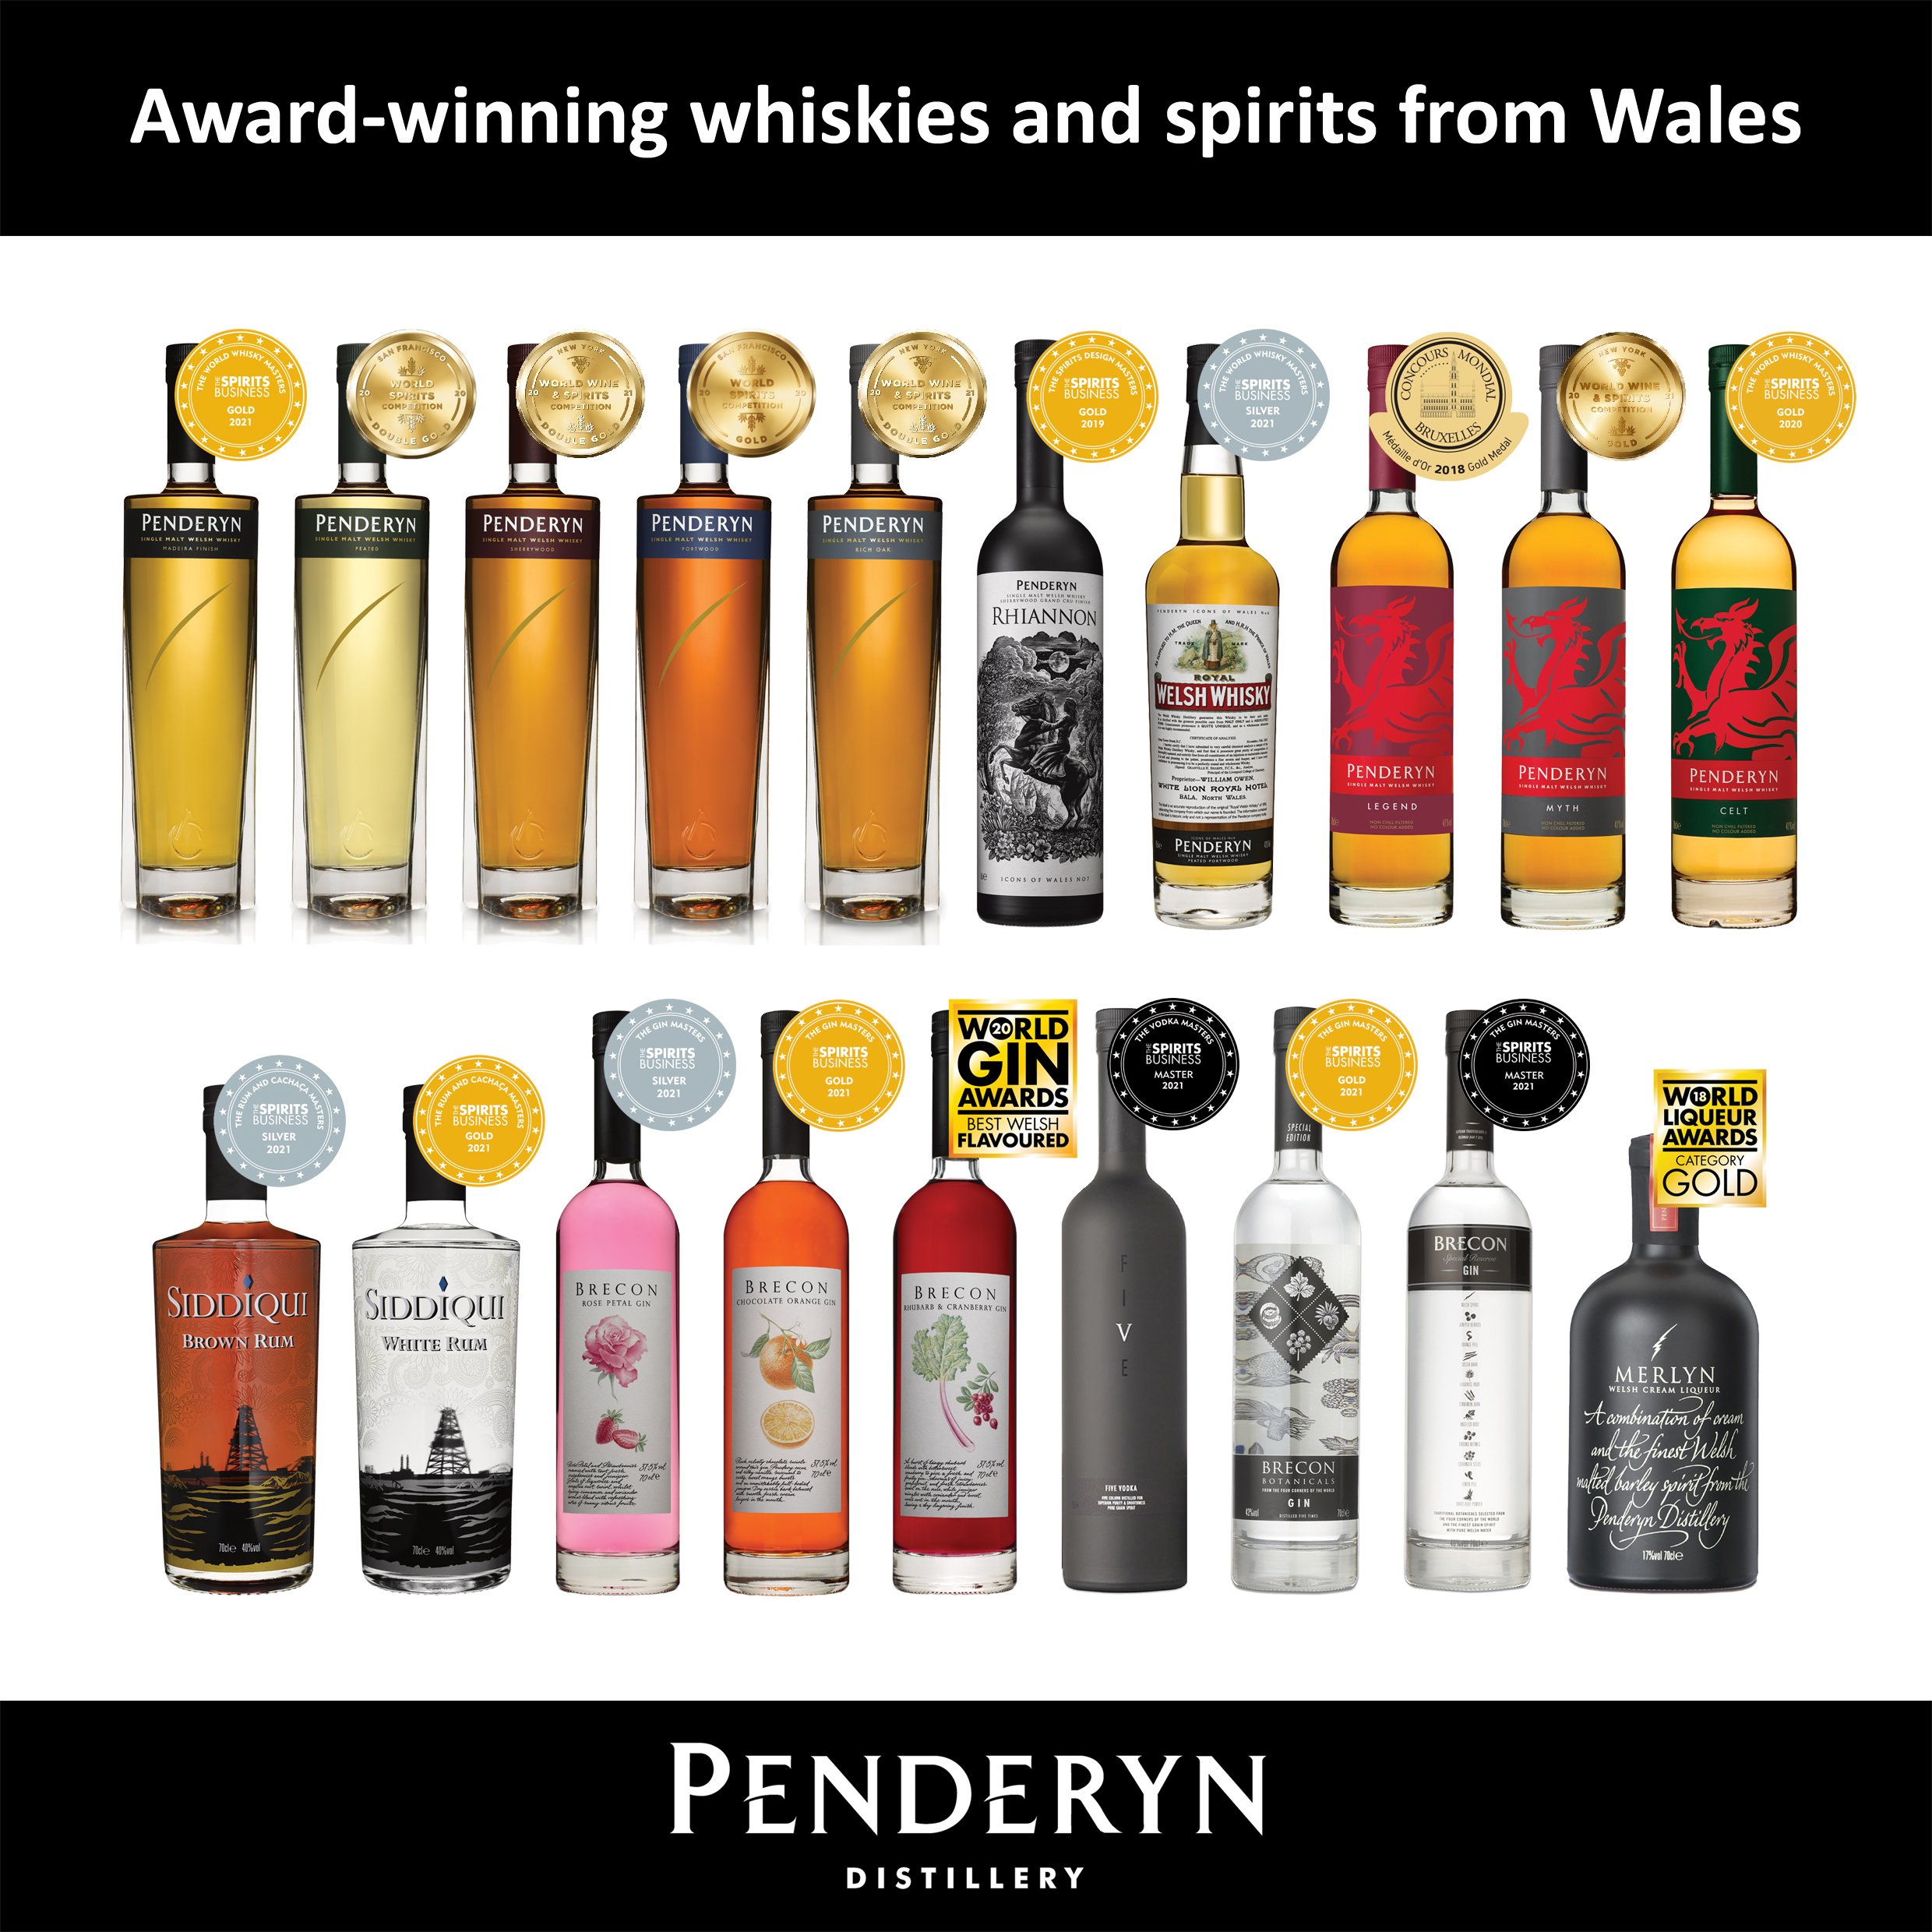 Penderyn's Latest Awards